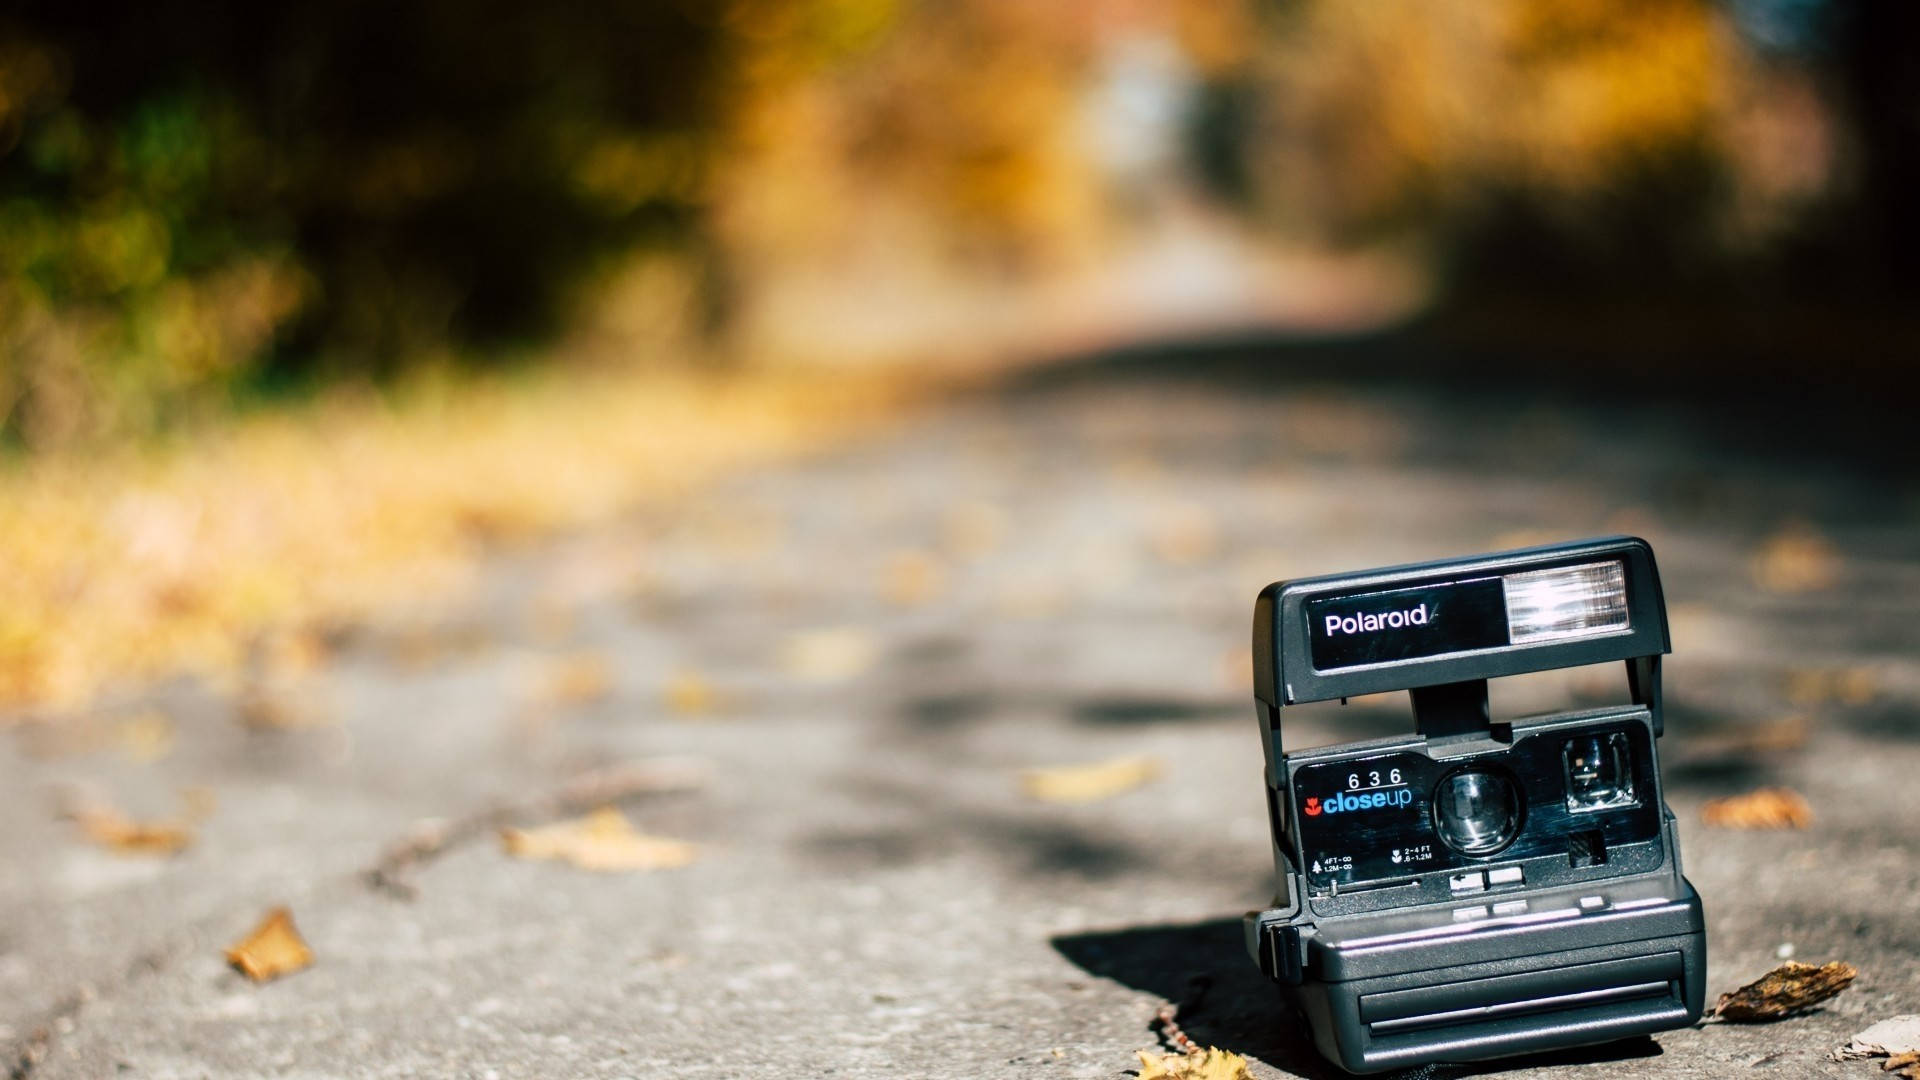 Polaroid Camera On The Road Background